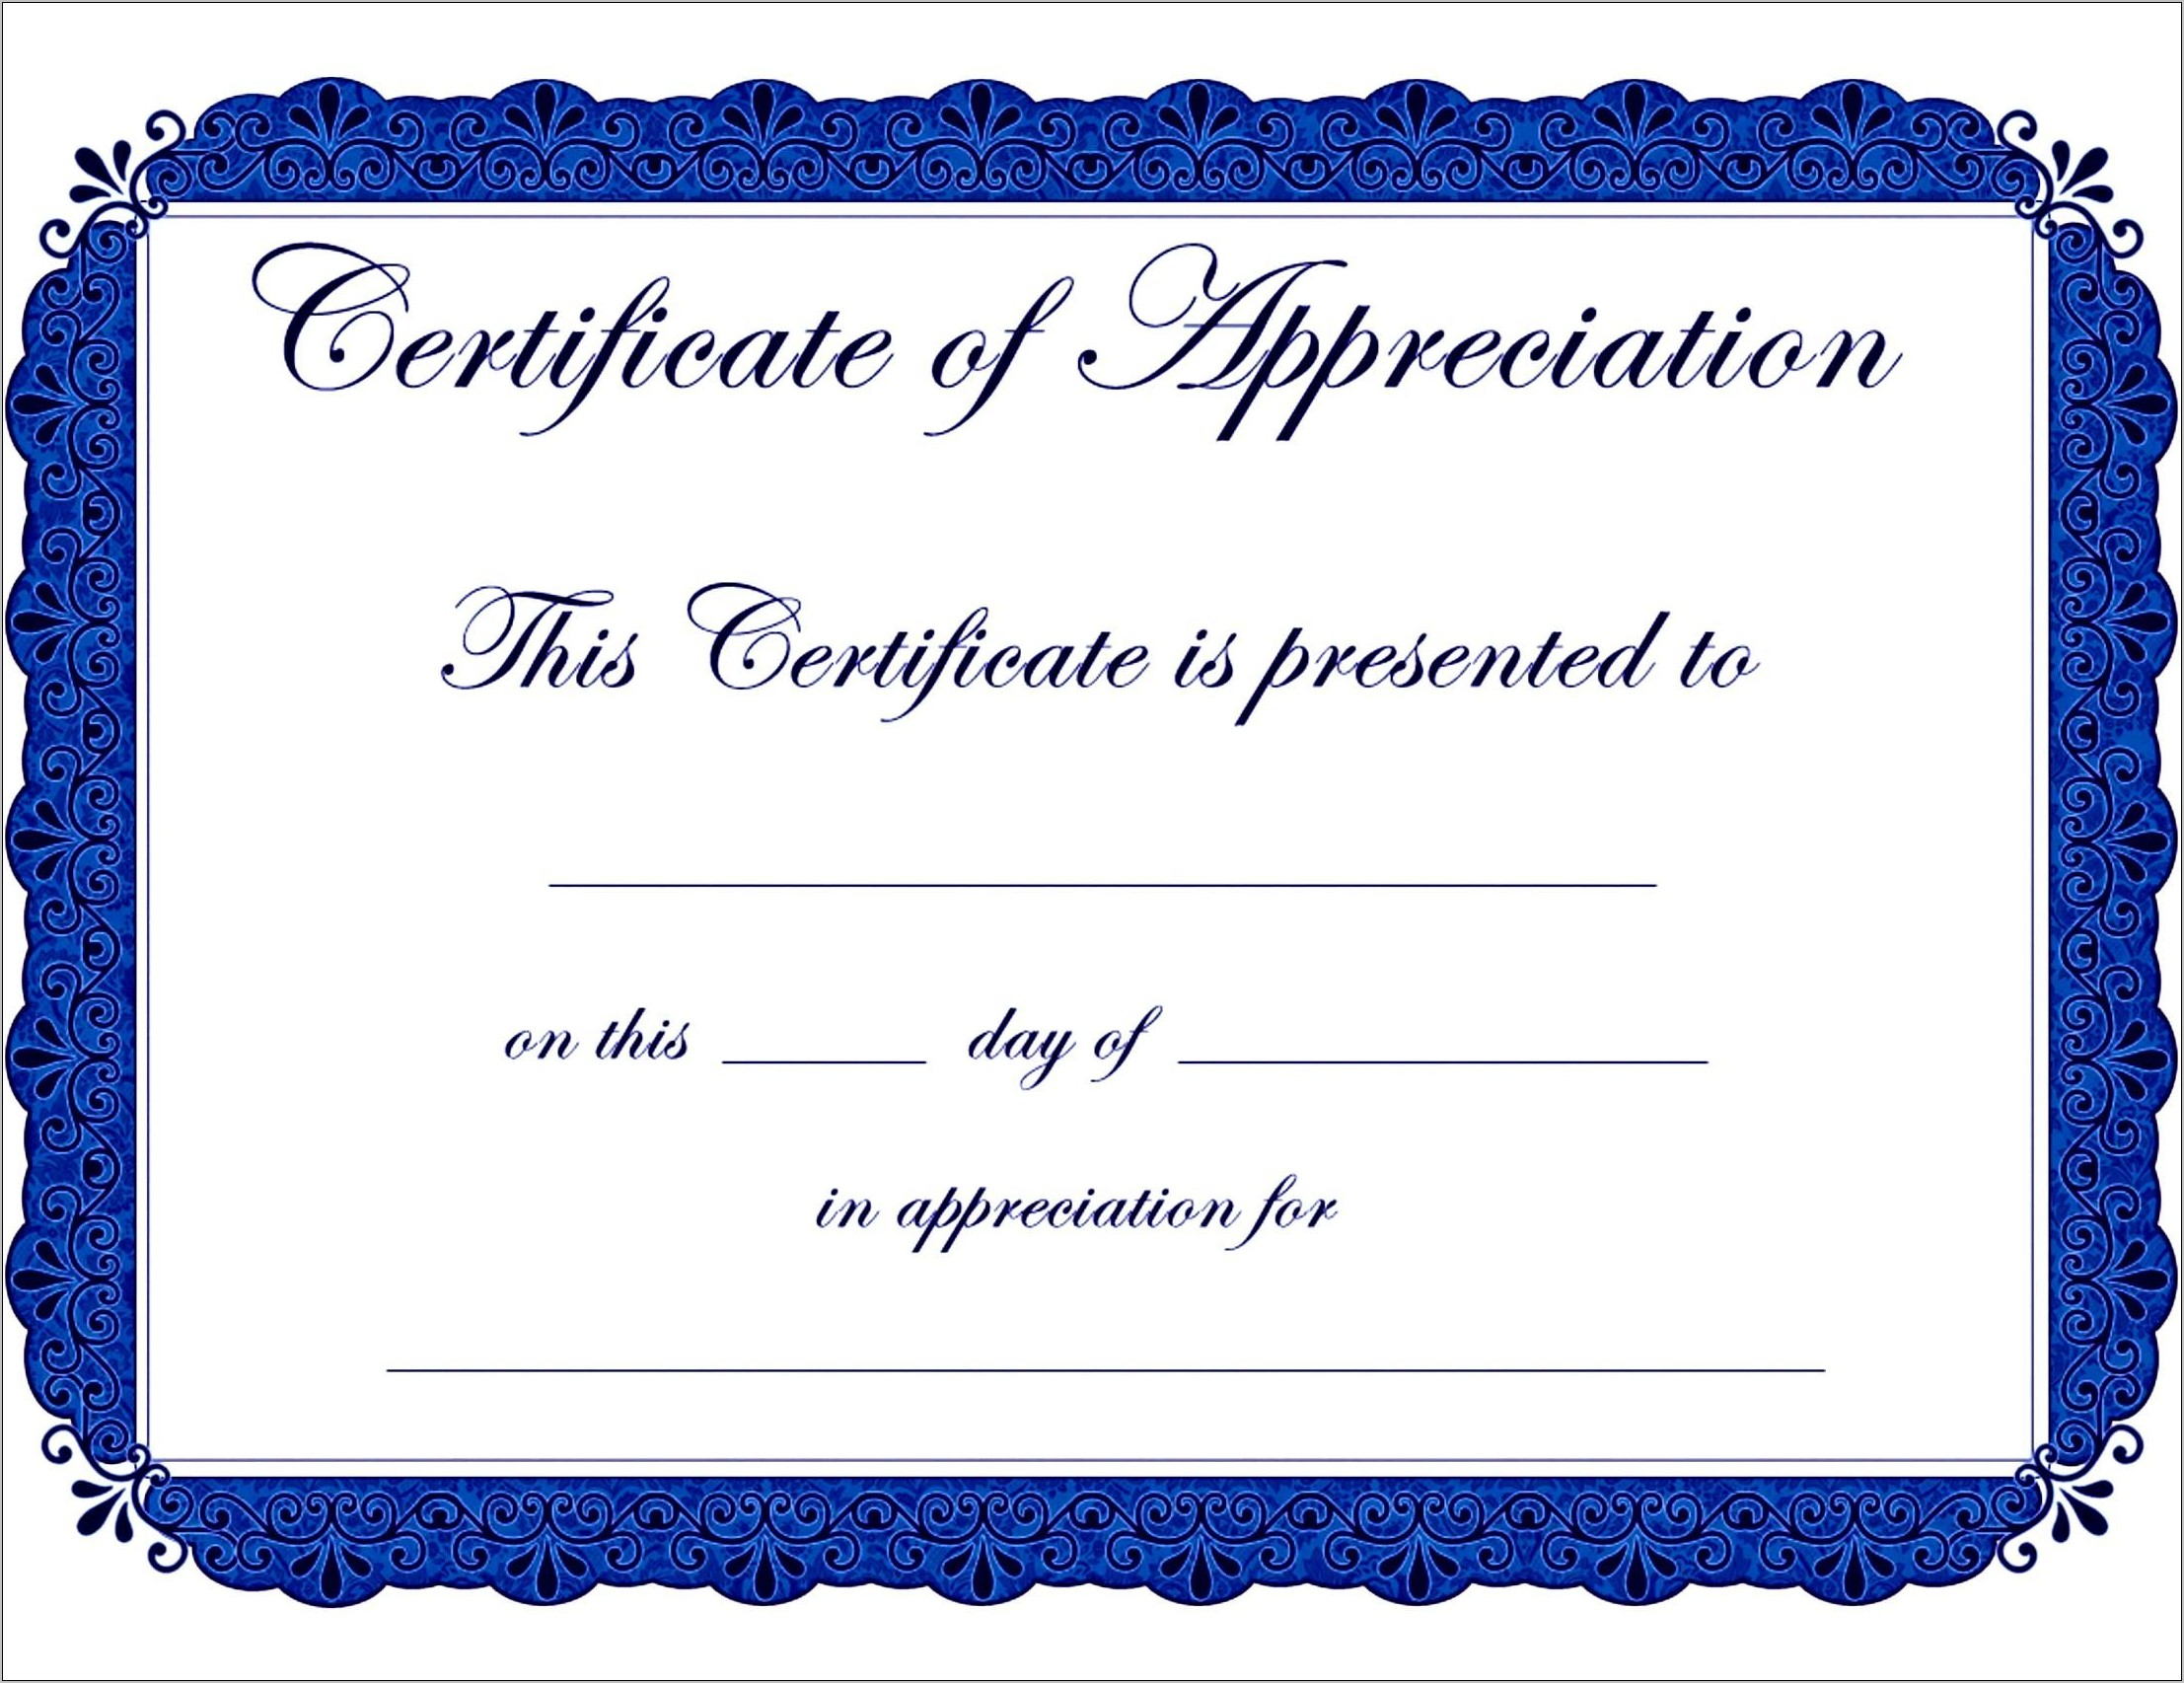 Template Certificate Of Appreciation Word